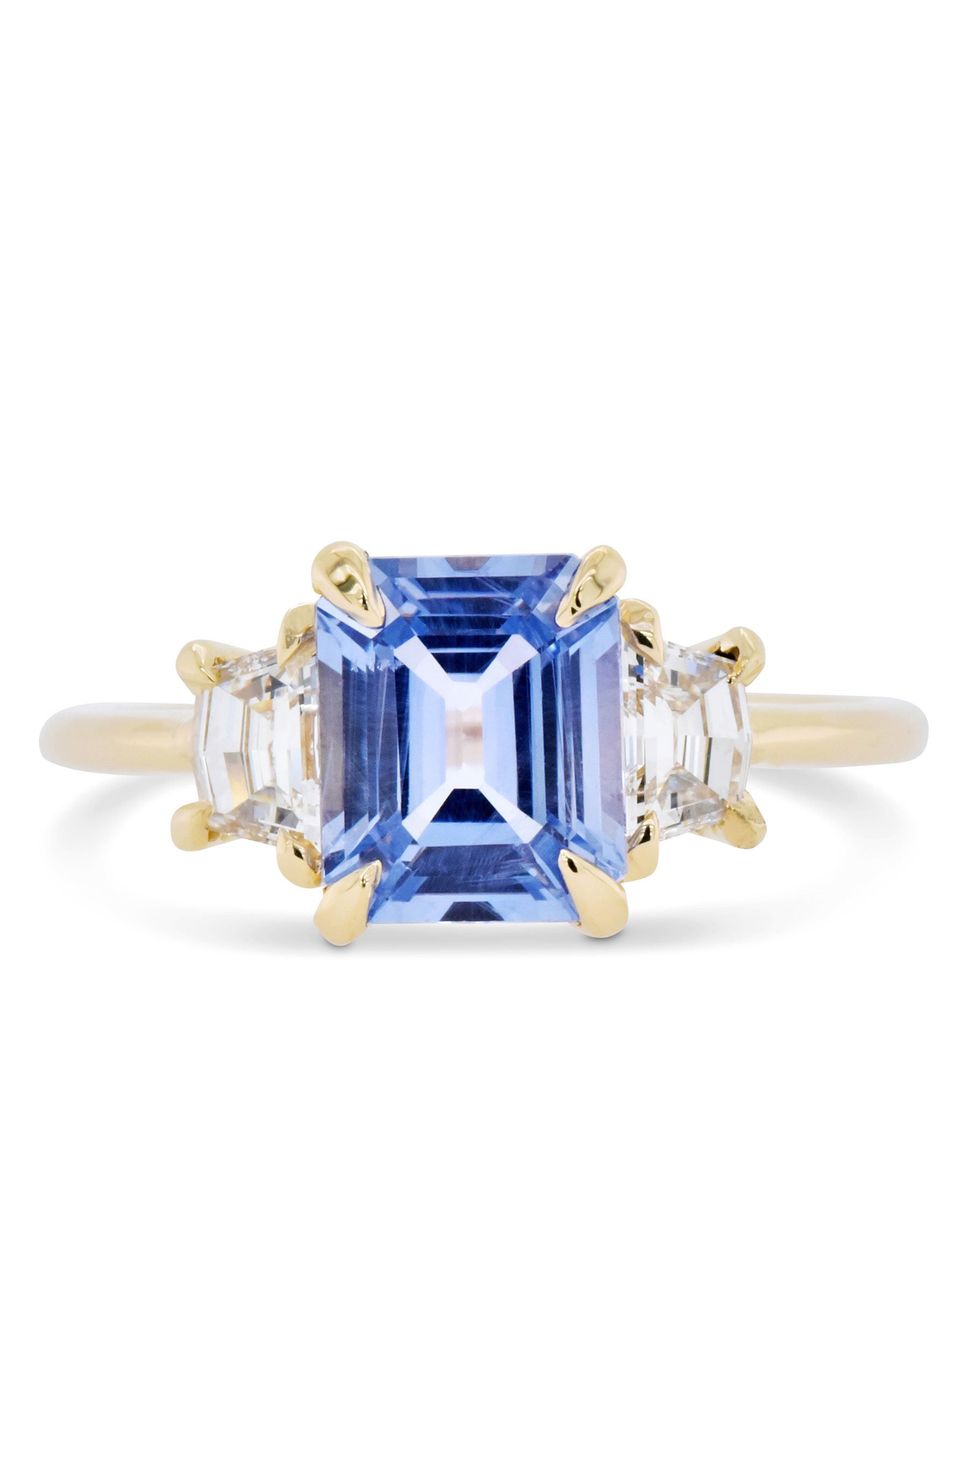 blue sapphire ring, best unique gemstone rings